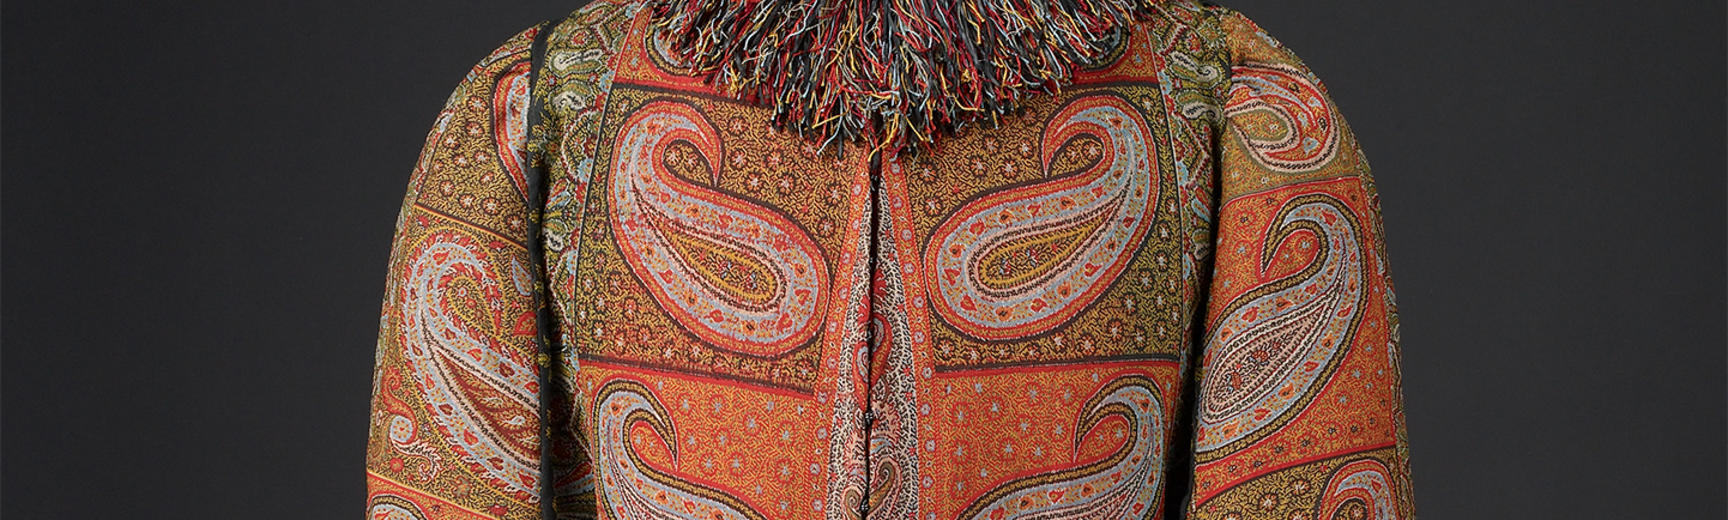 A winter kashmir shawl with fringed collar